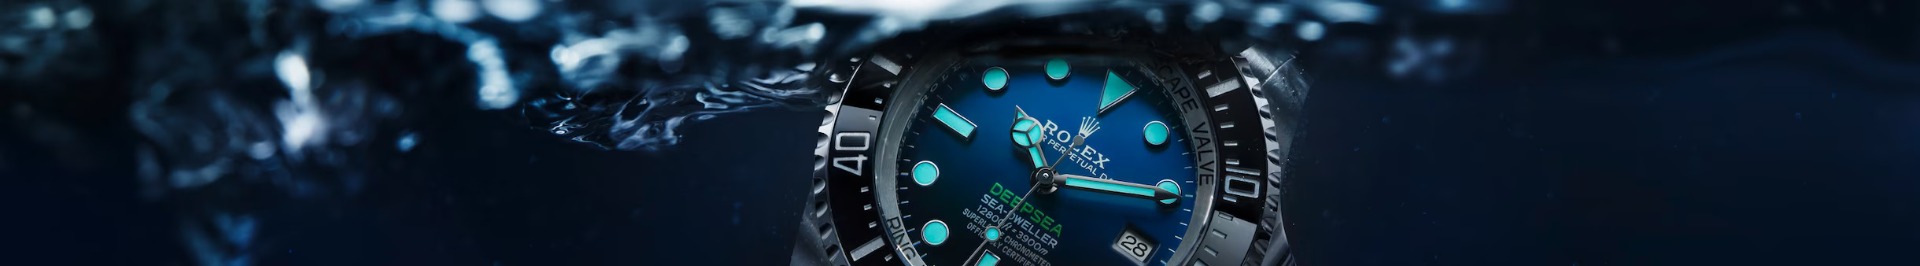 Rolex Air-King Watches